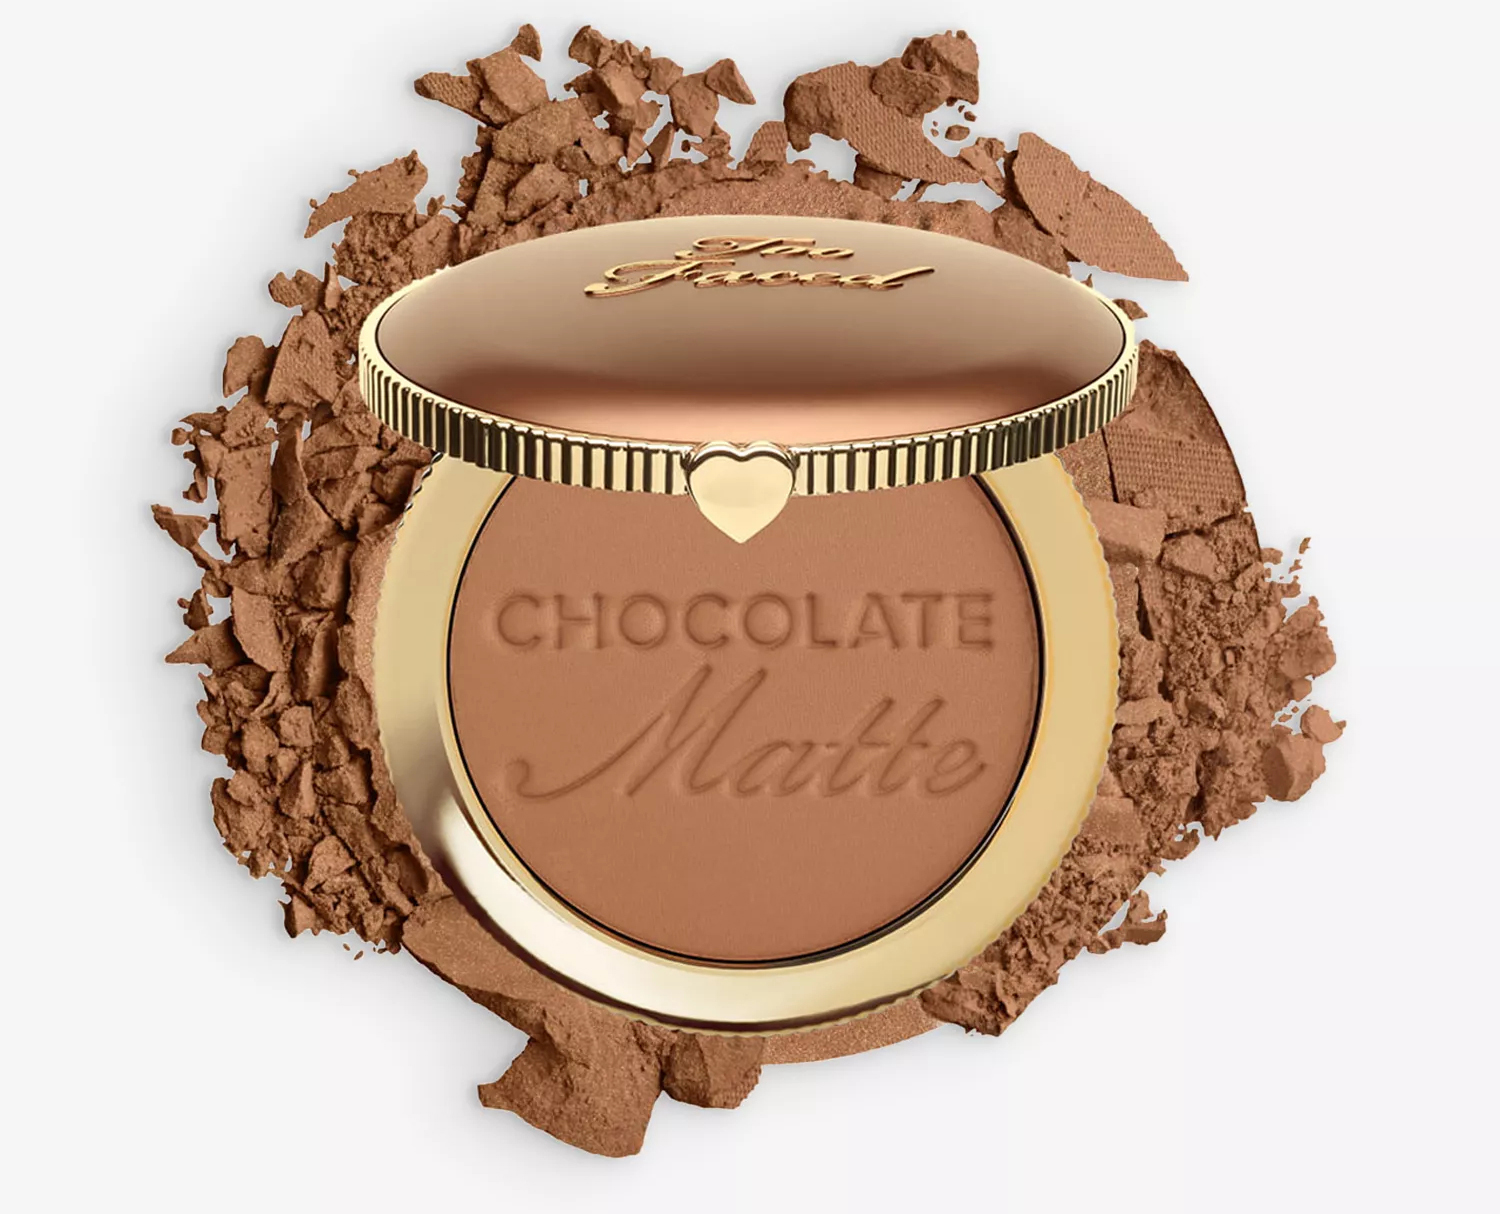 Too Faced Soleil Matte Bronzer in Chocolate